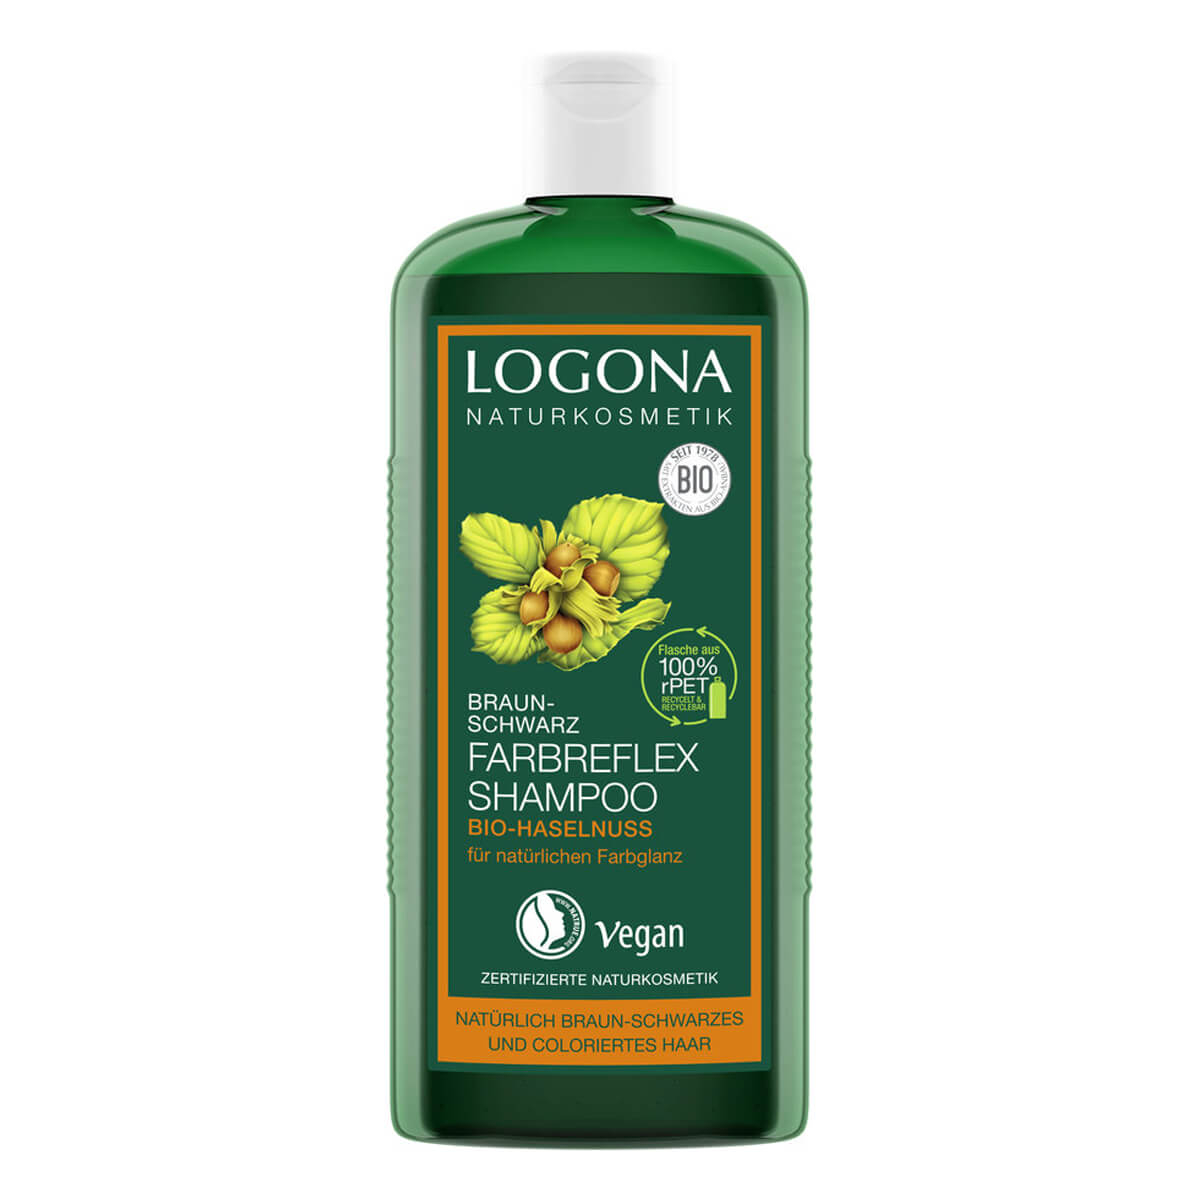 Logona - Farbreflex Shampoo Braun-Schwarz Bio-Haselnuss - 250 ml